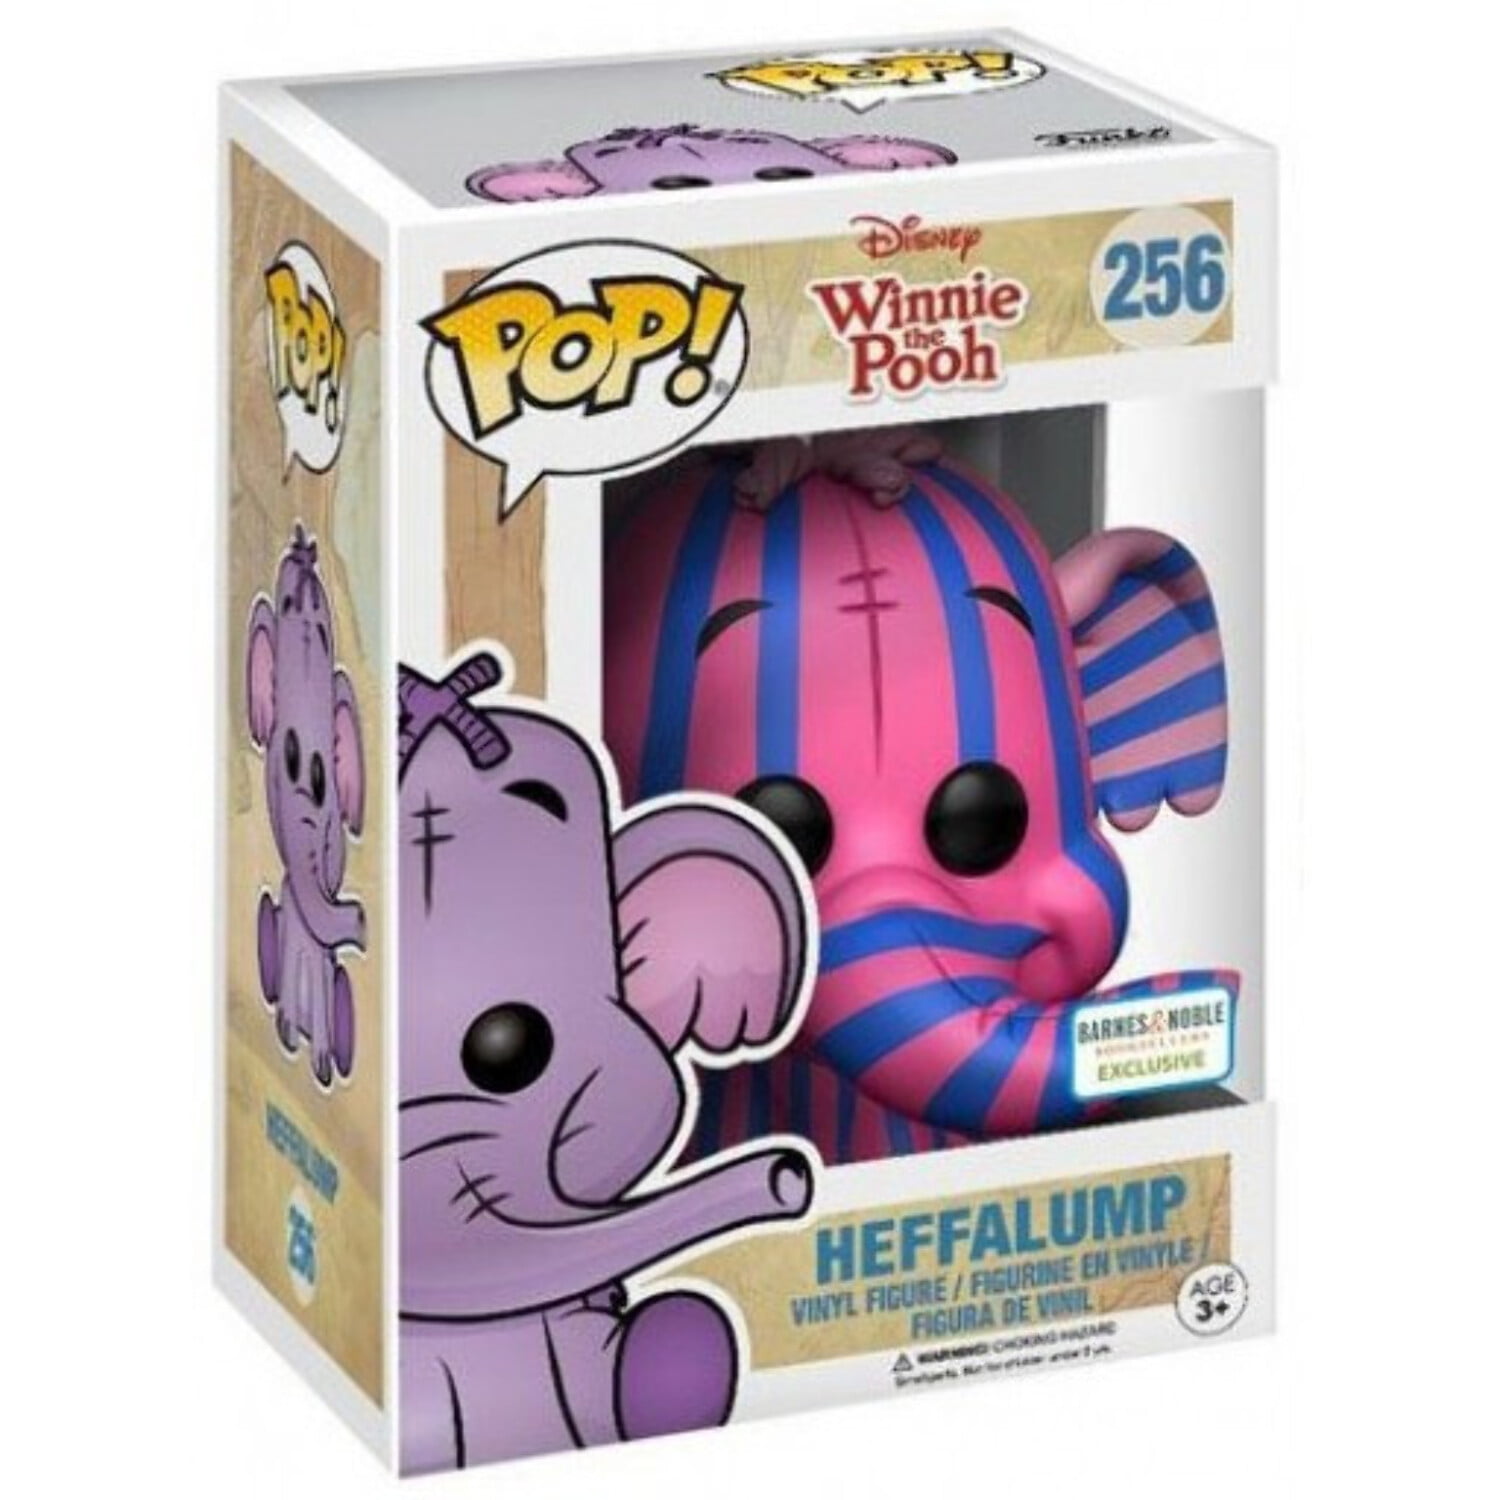 Winnie the Pooh w/ Stripes &amp; Noble Exclusive Funko Pop! Vinyl Figure #256 - Walmart.com